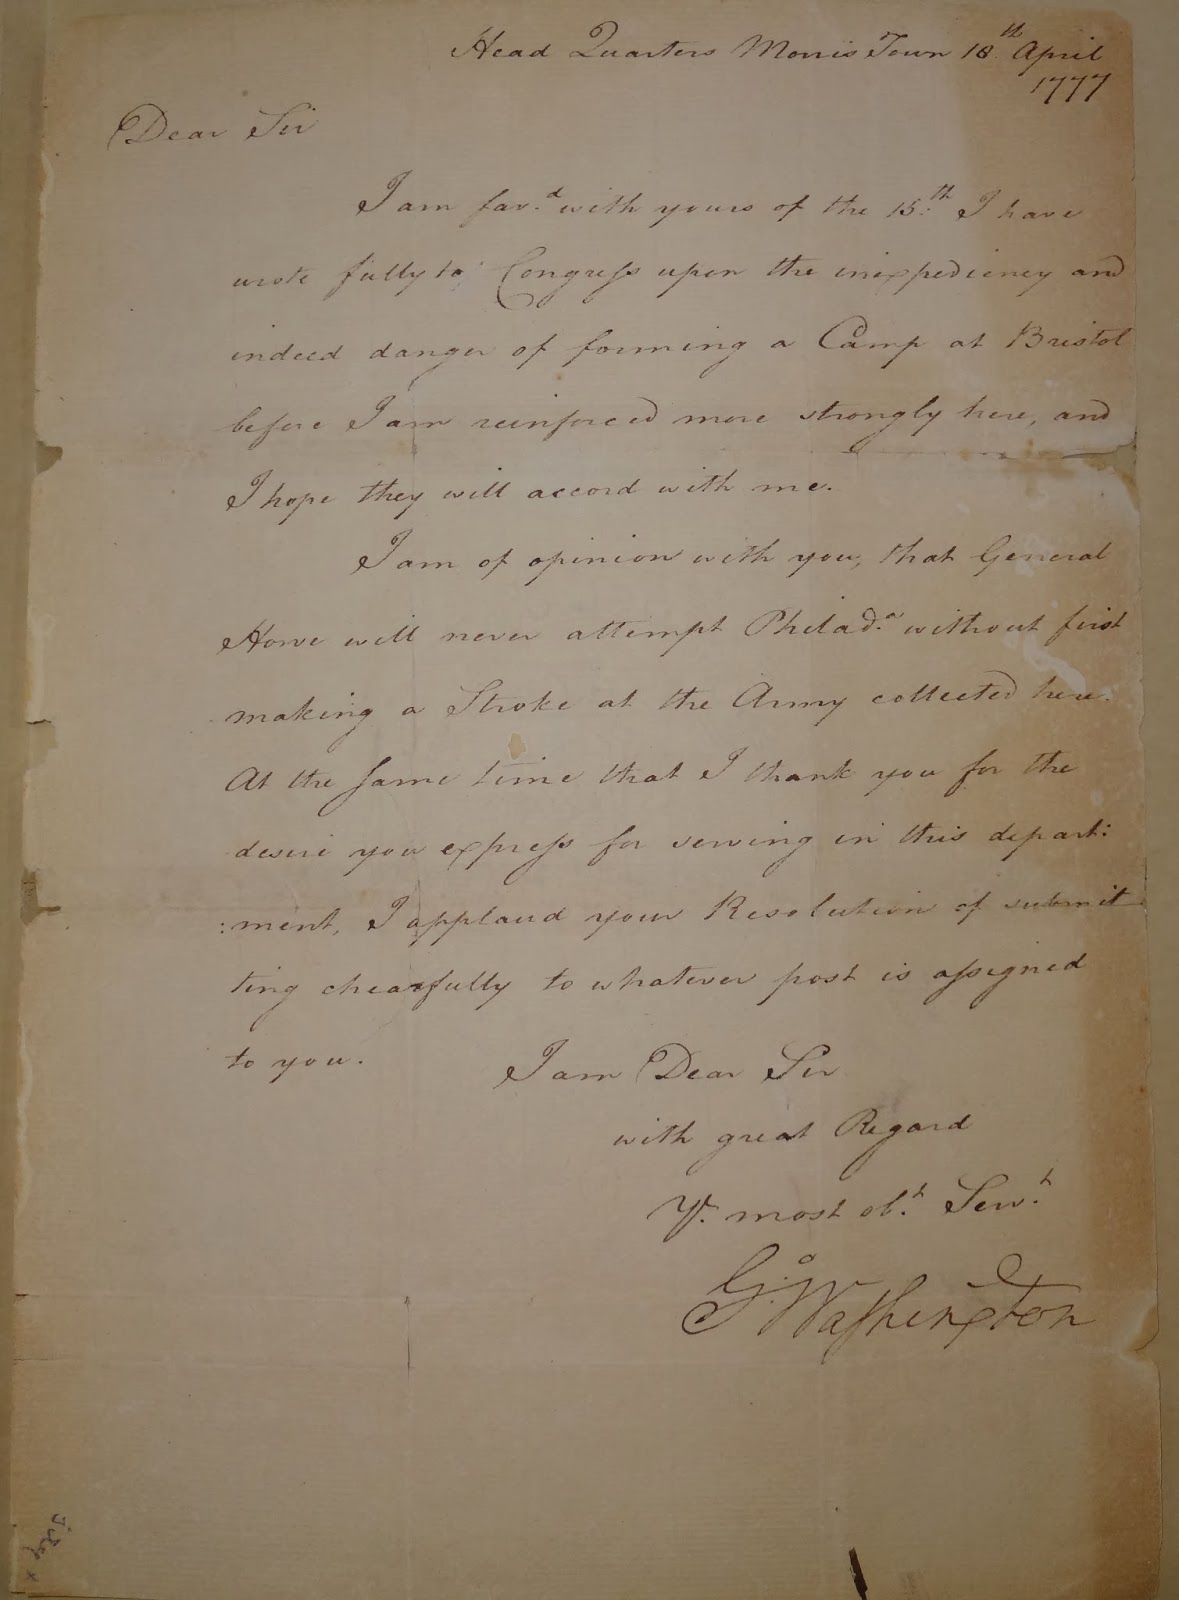 A handwritten letter by George Washington in 1777